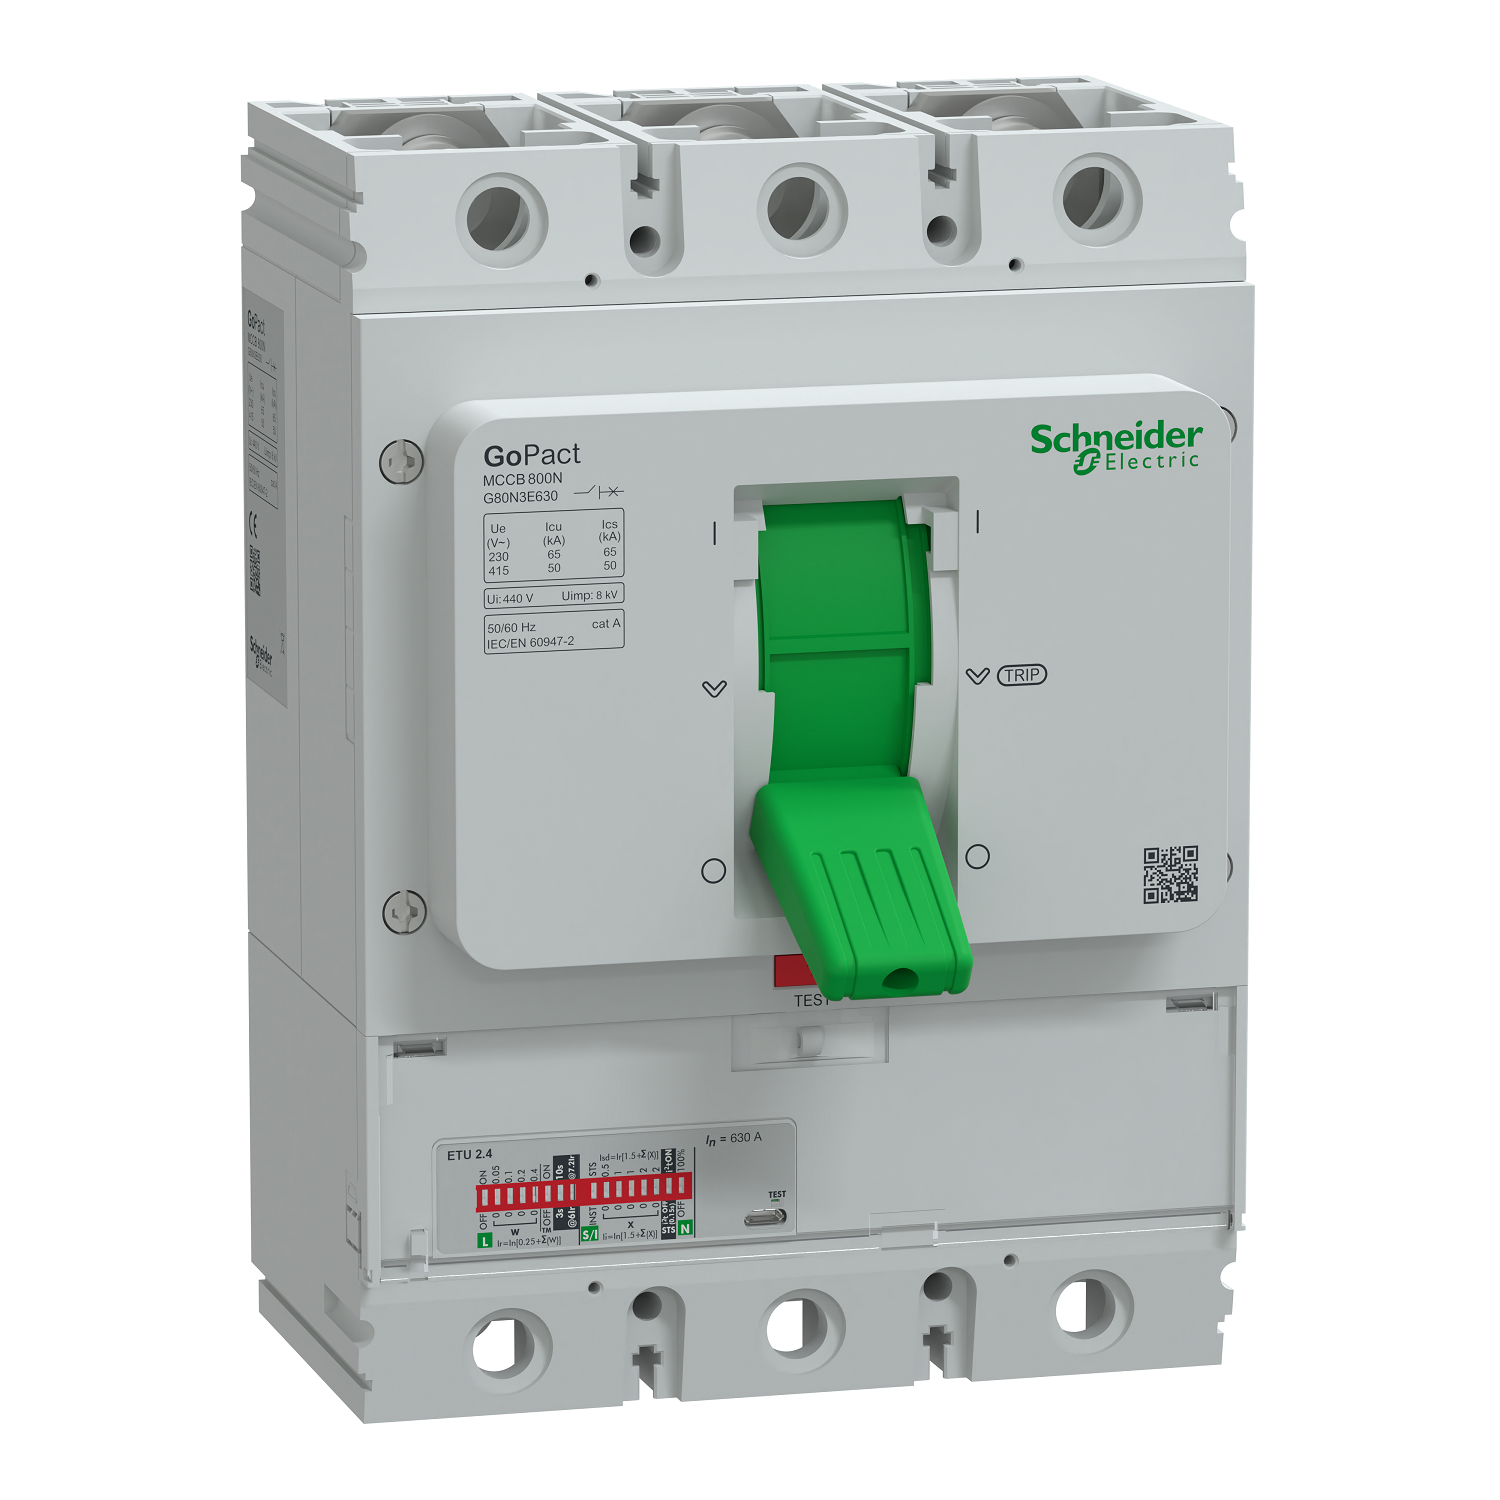 Circuit breaker, GoPact MCCB 800, 3 poles, 50kA at 415VAC, 630A rating, ETU trip unit, adjustable thermal protection